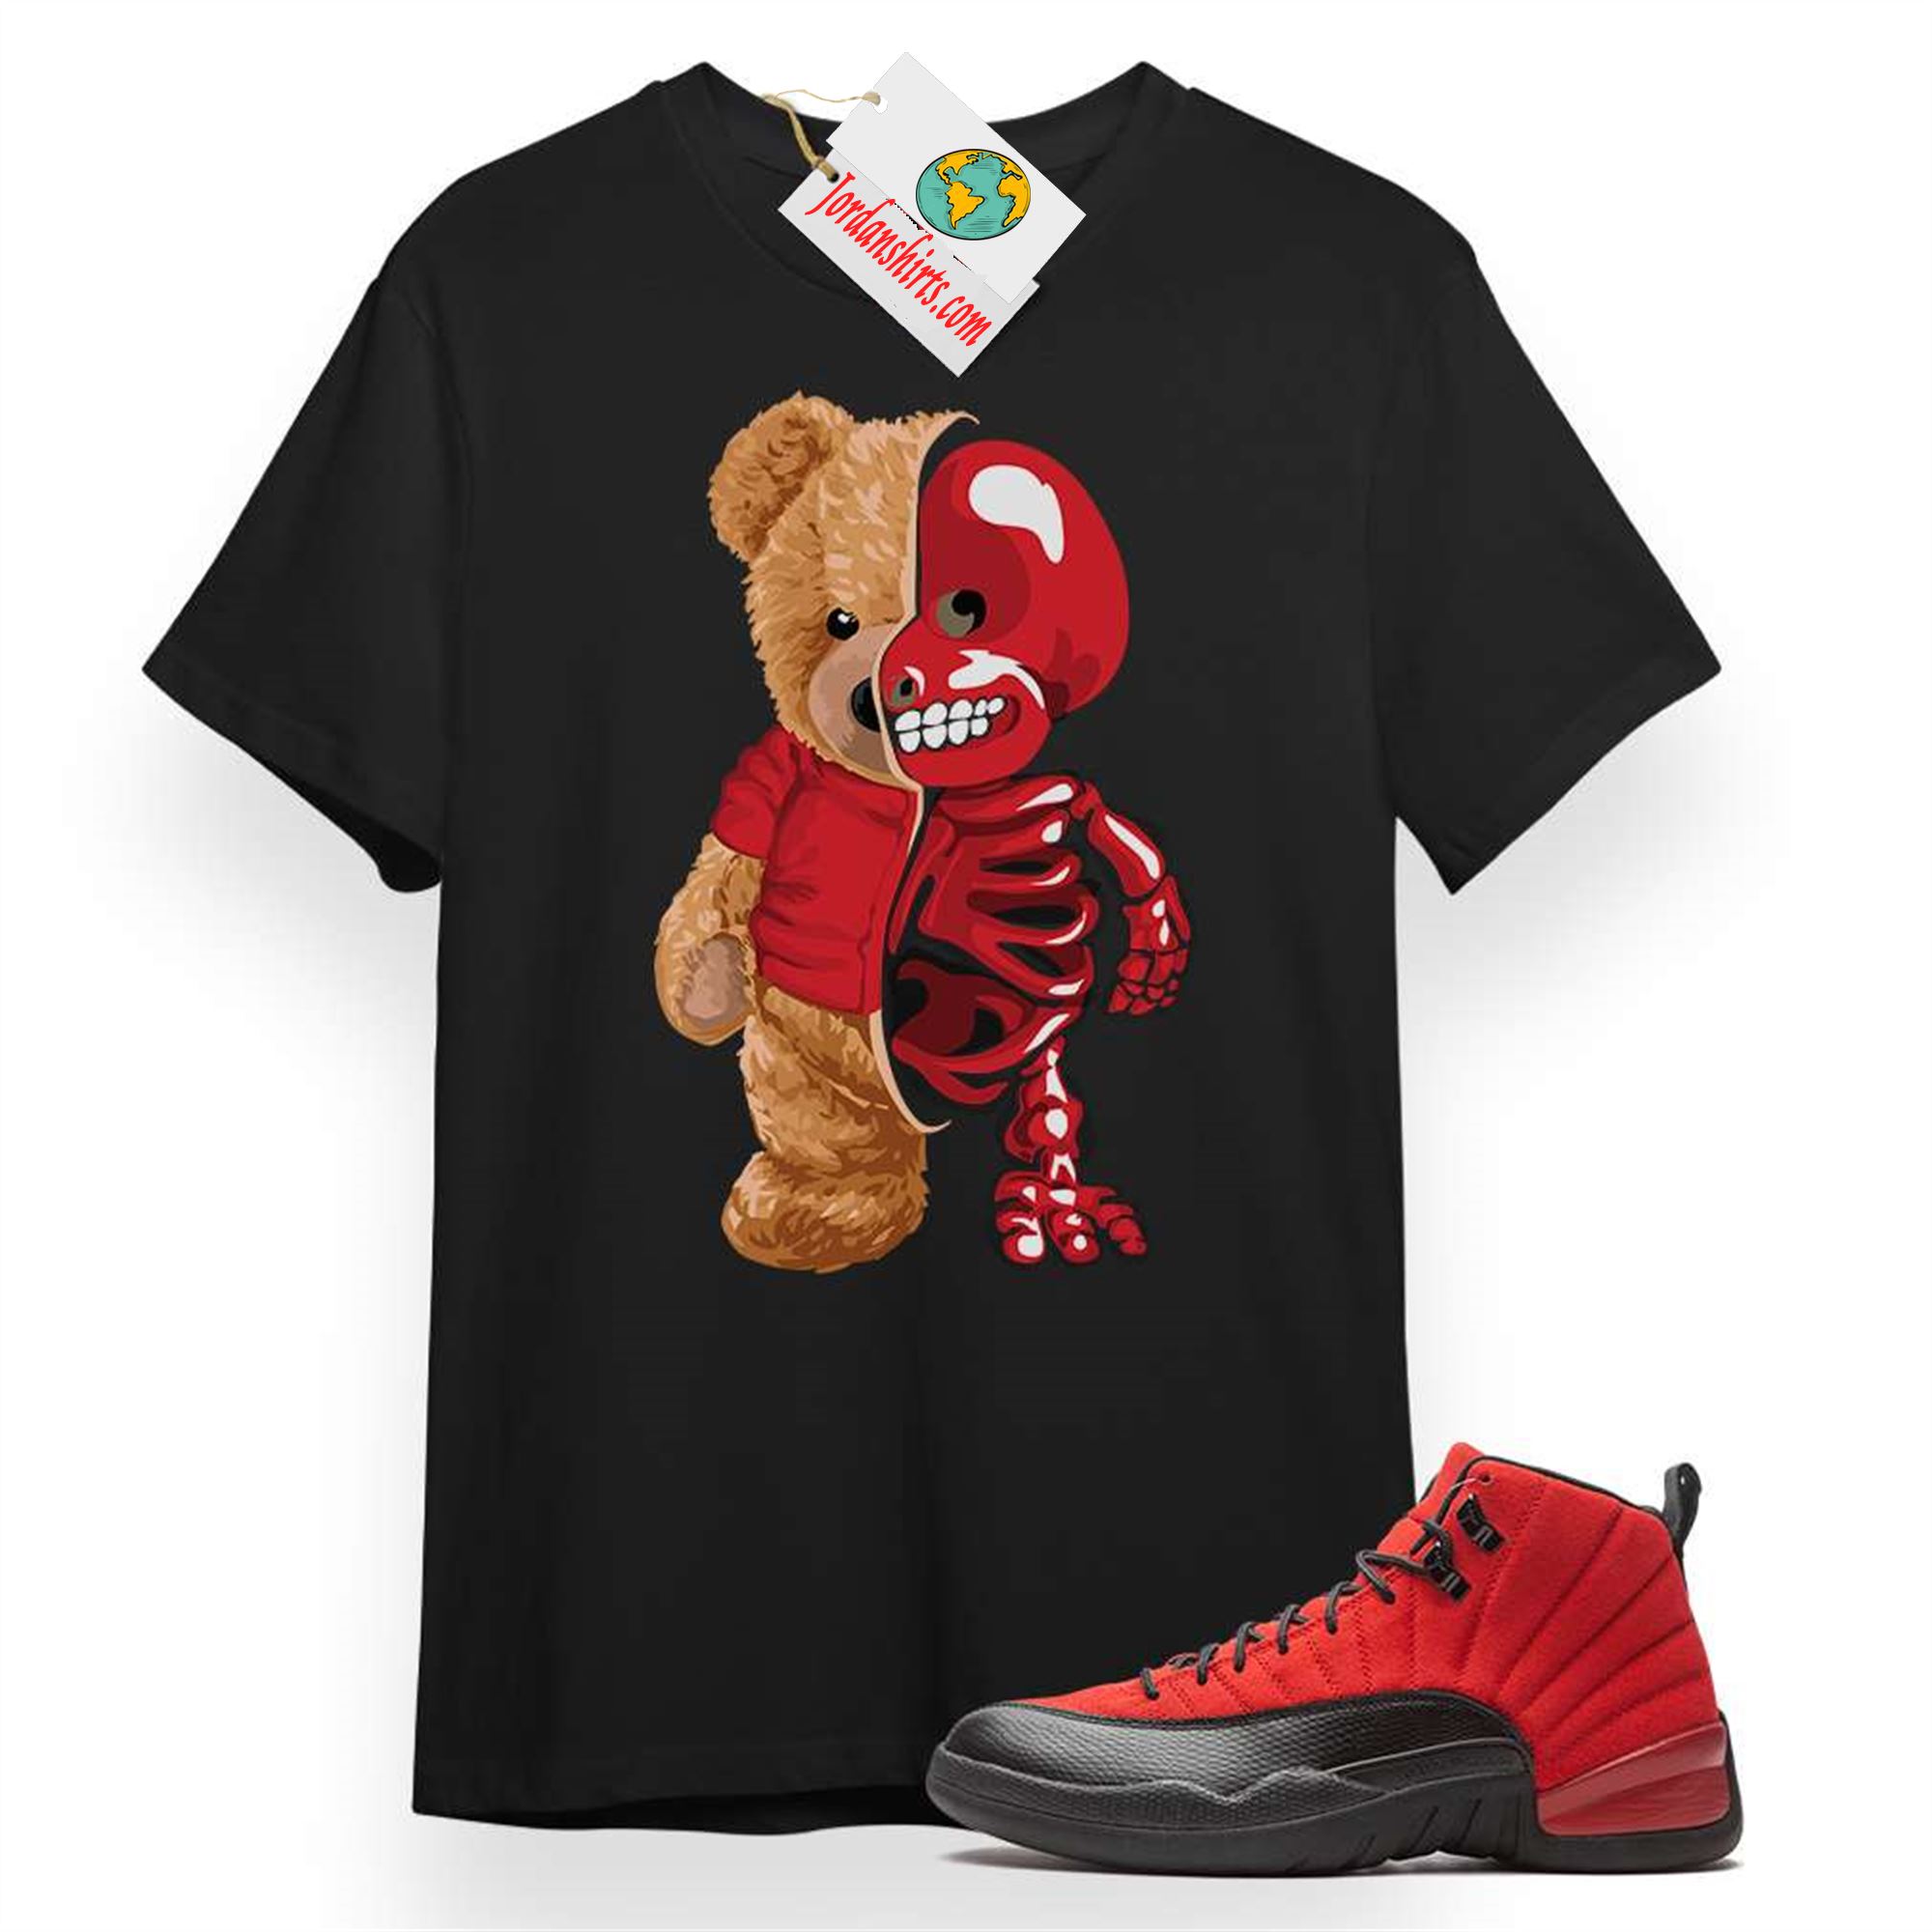 Jordan 12 Shirt, Teddy Bear Terminator Black T-shirt Air Jordan 12 Reverse Flu Game 12s Size Up To 5xl